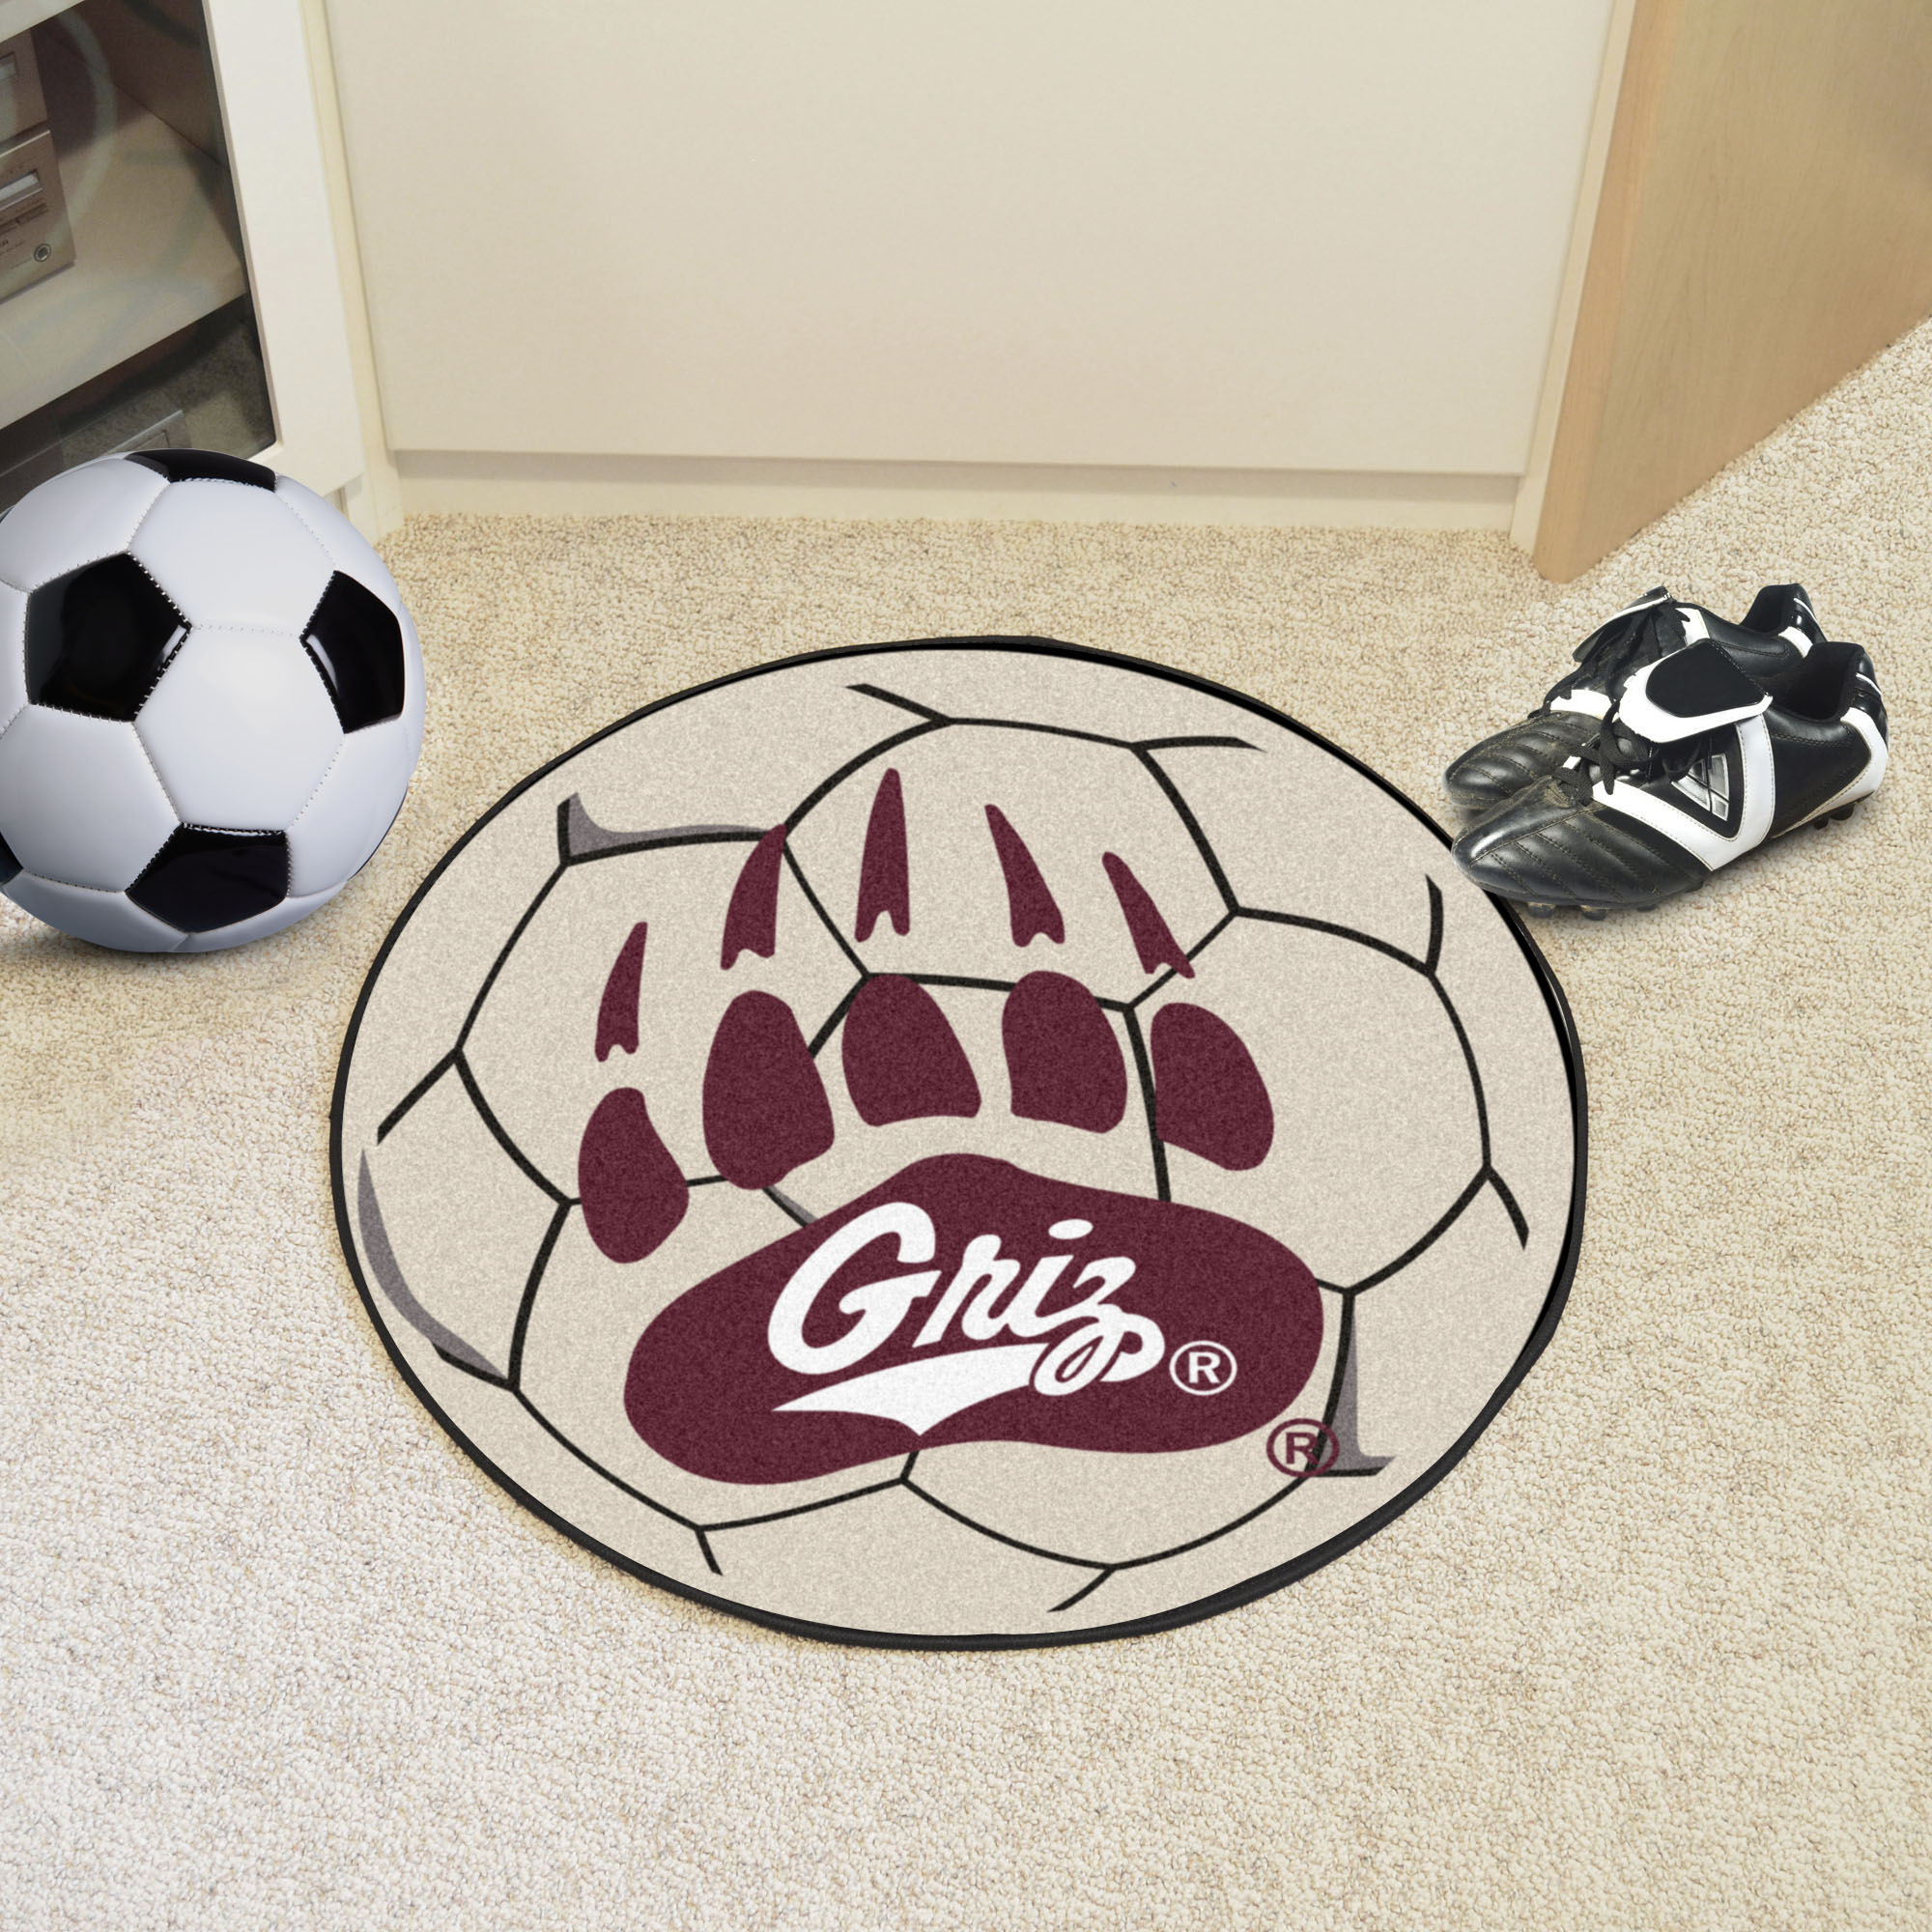 University of Montana Ball Shaped Area rugs (Ball Shaped Area Rugs: Soccer Ball)